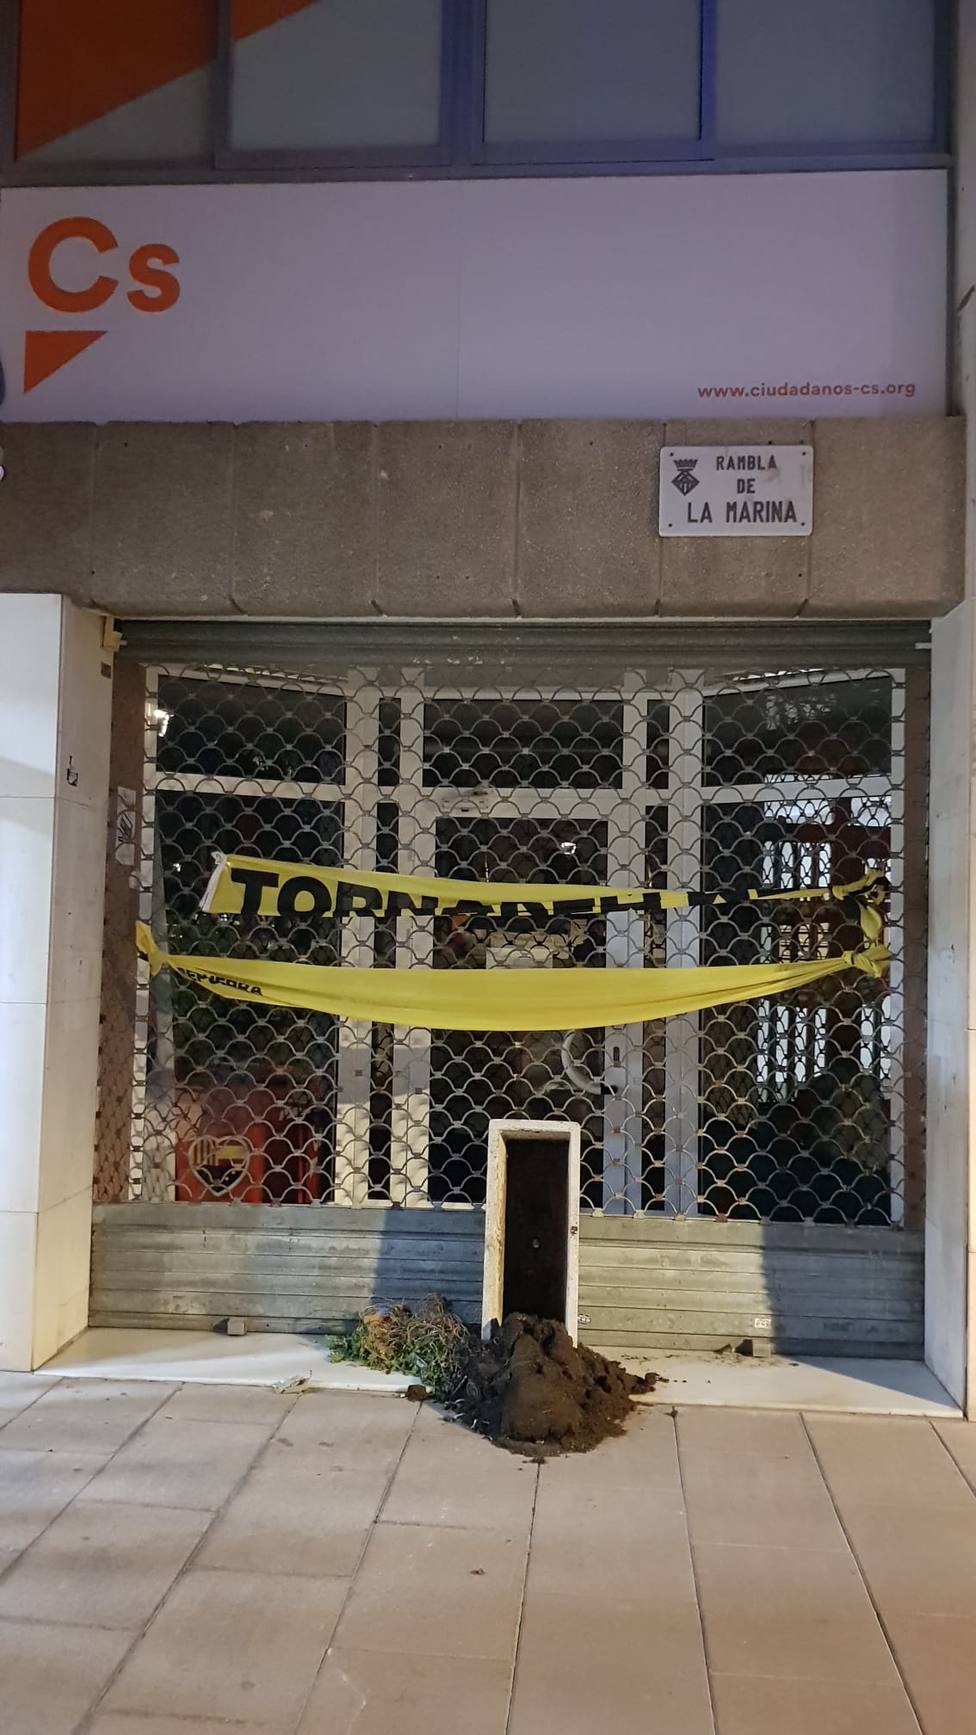 La sede de Ciudadanos de lHospitalet del Llobregat después del ataque